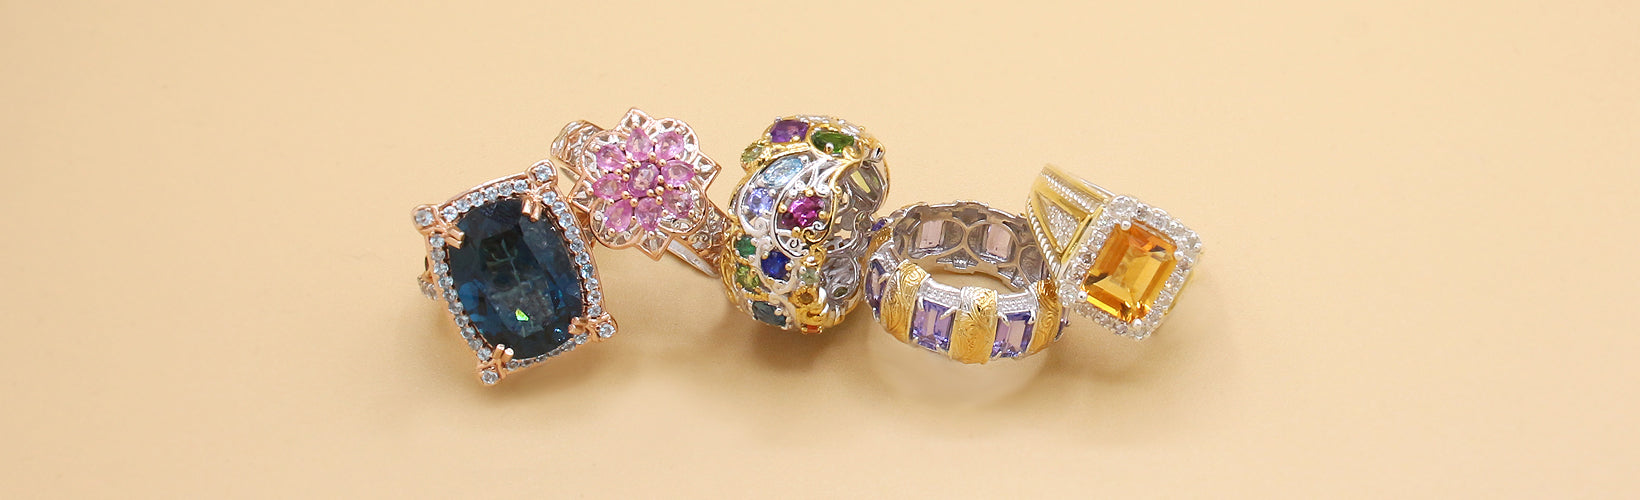 Gems En Vogue Rings Collection